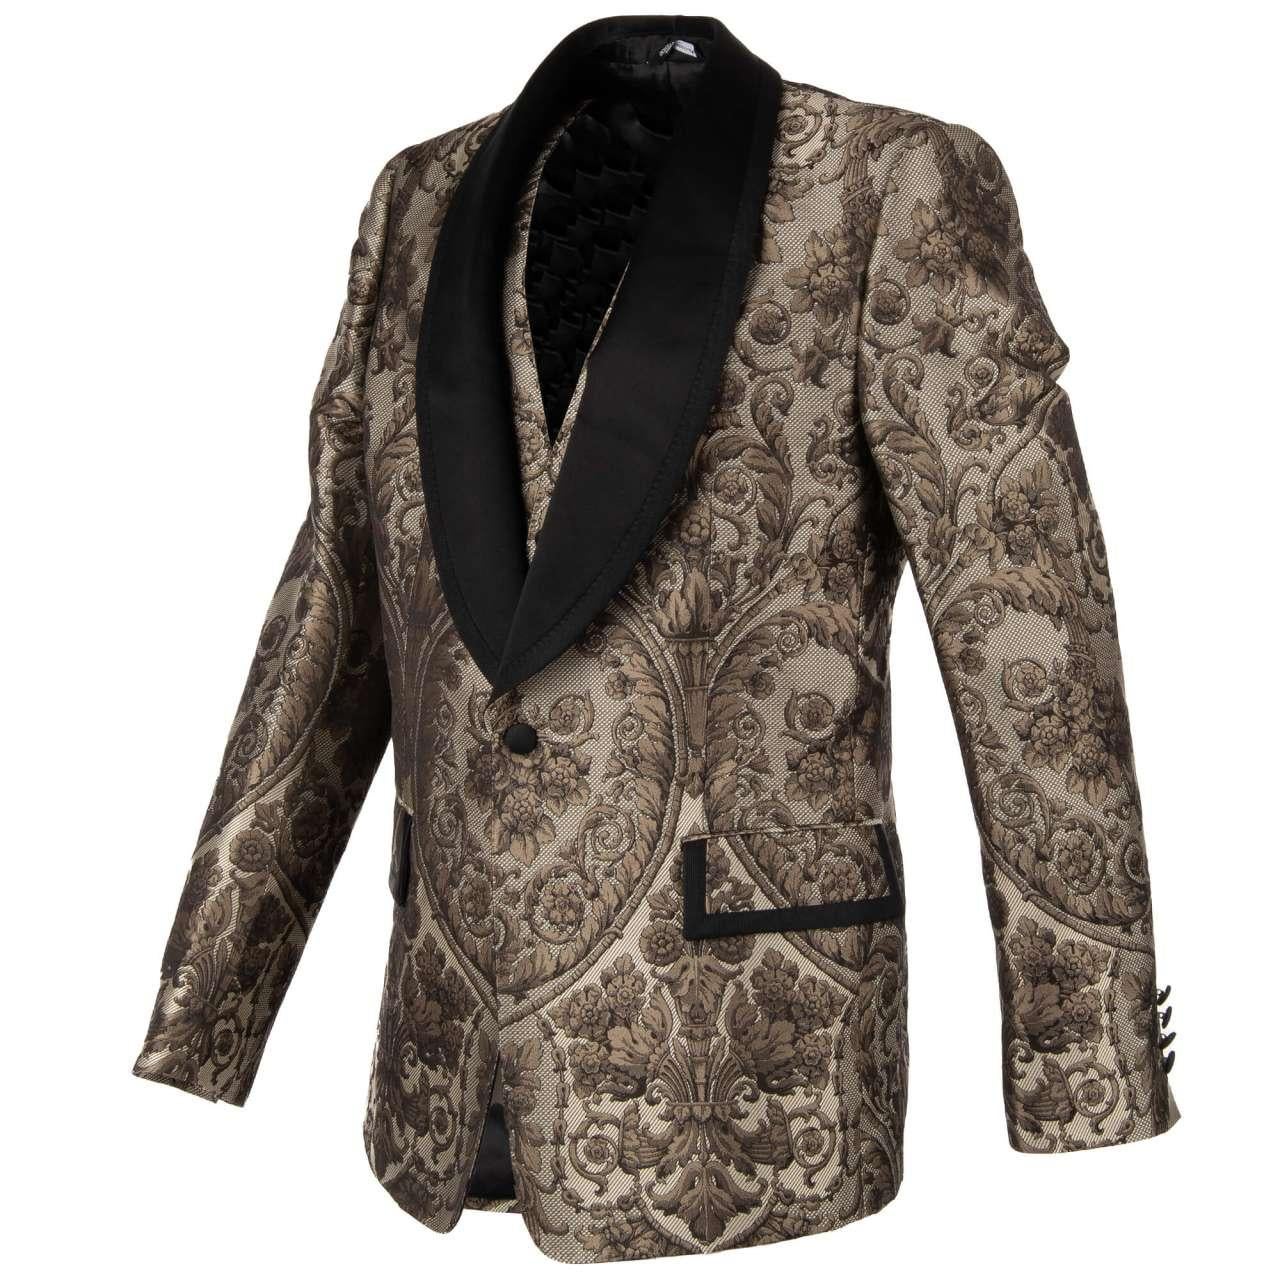 Dolce & Gabbana Baroque Jacquard Blazer with Waistcoat Black Beige 50 US 40 M L For Sale 2